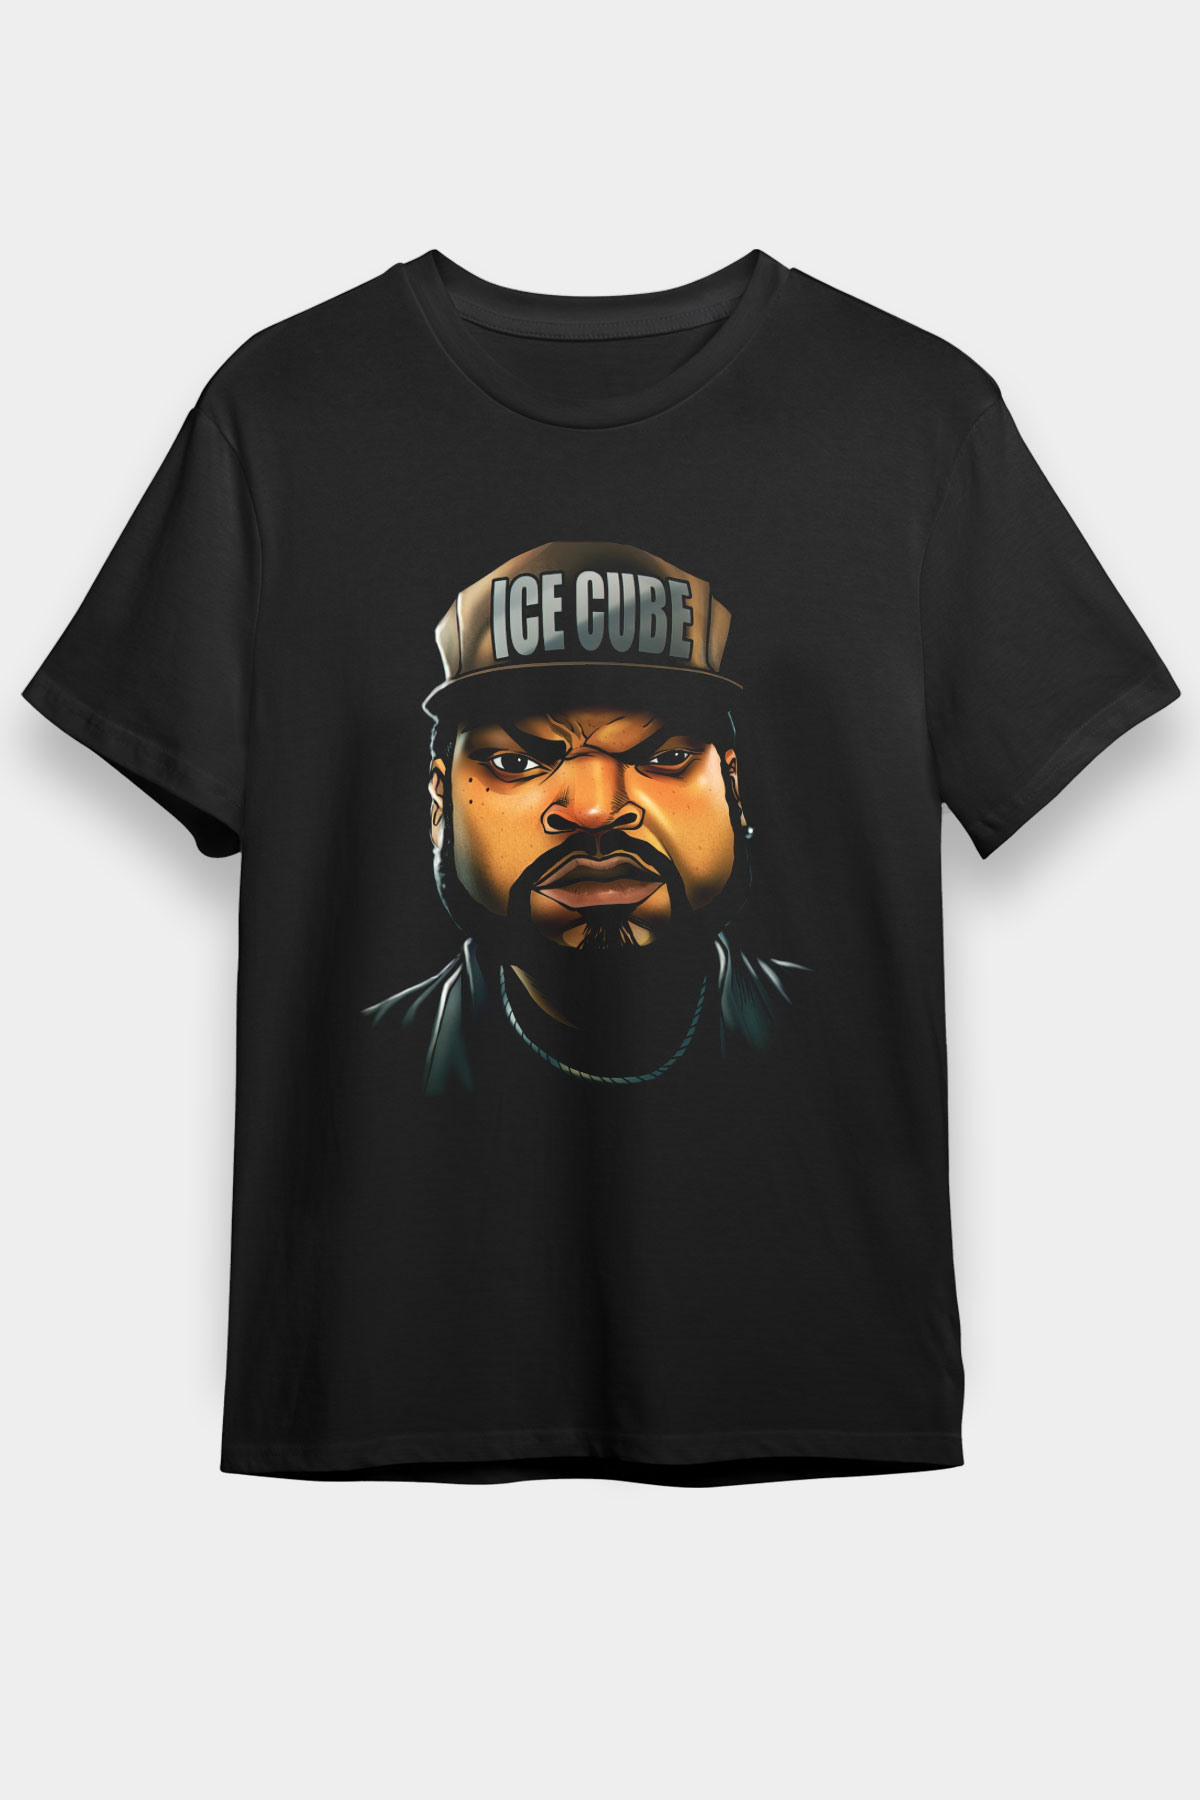 Ice Cube T shirt,Hip Hop,Rap Tshirt 11